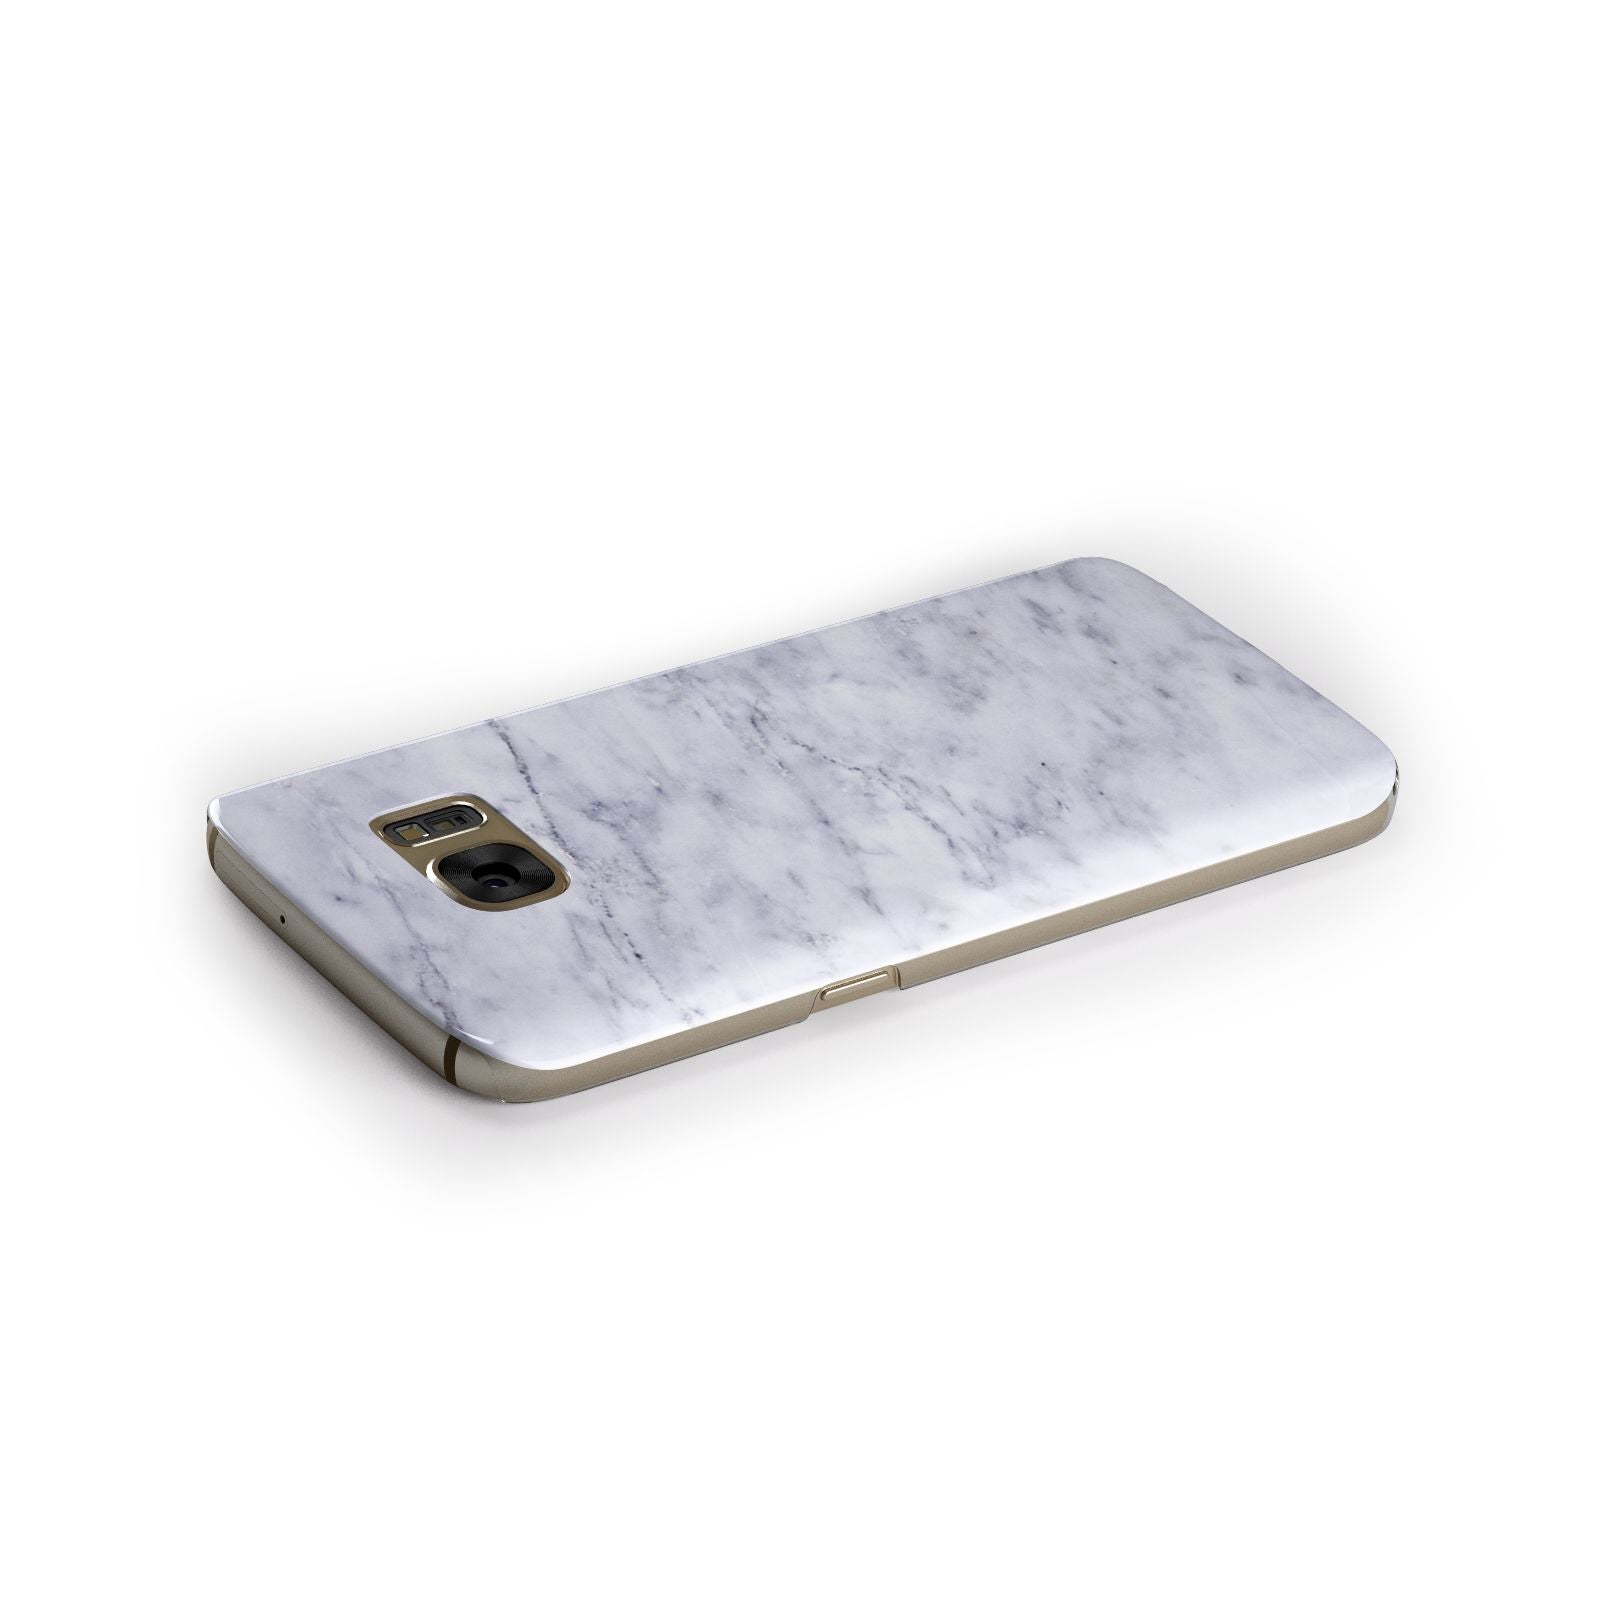 Faux Carrara Marble Print Samsung Galaxy Case Side Close Up